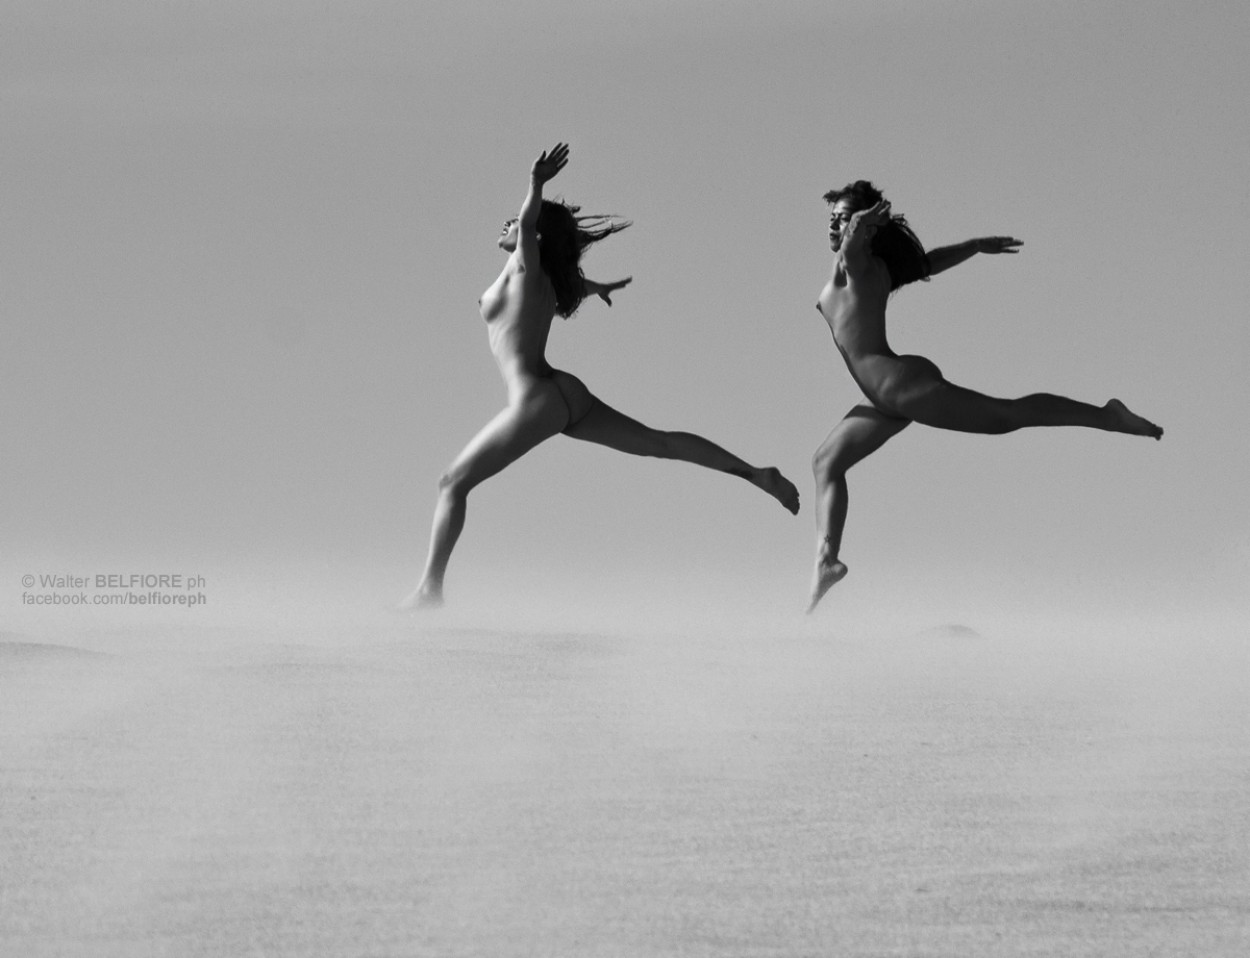 "Mujeres que vuelan" de Walter Belfiore